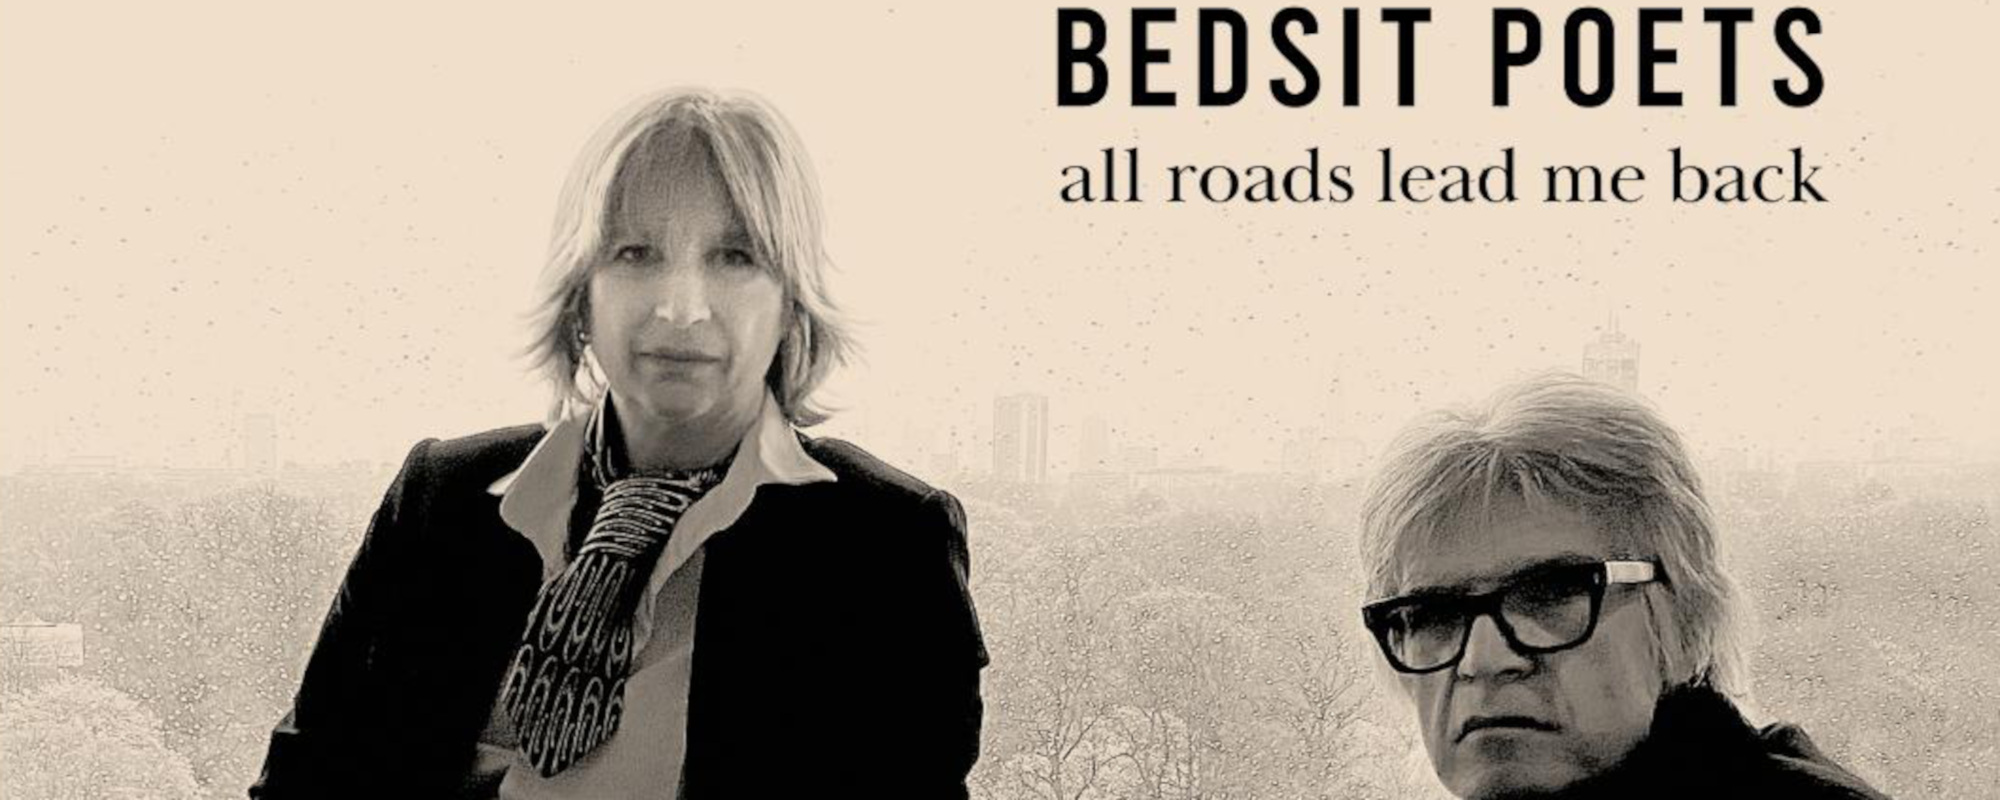 Review: Bedsit Poets Re-awake